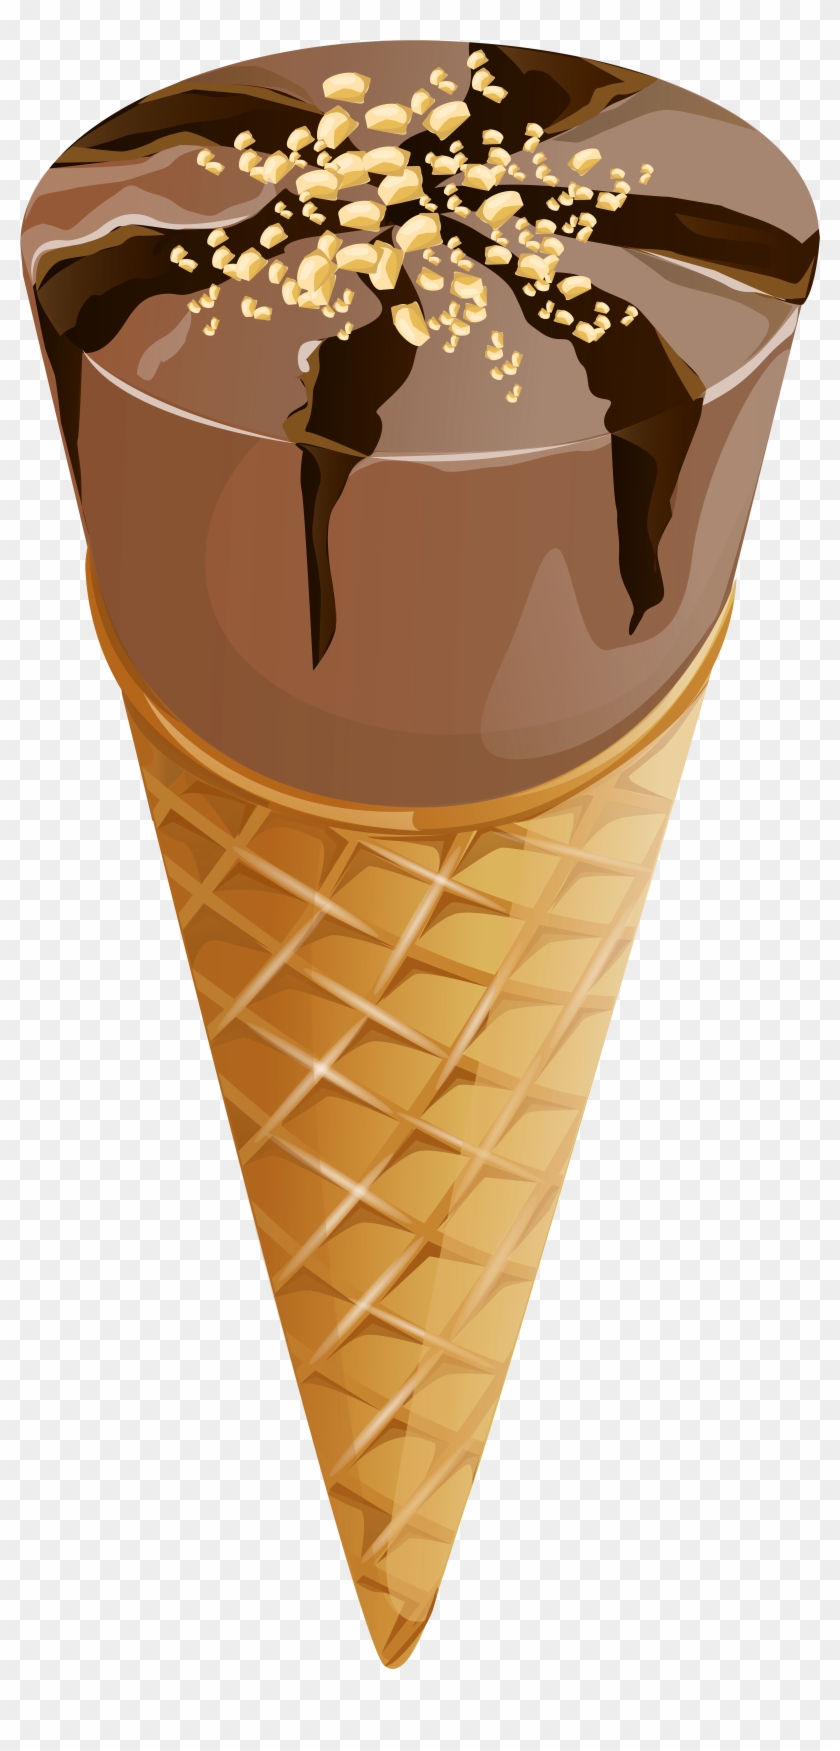 Chocolate Ice Cream Transparent Png Clip Art Image - Clip Art